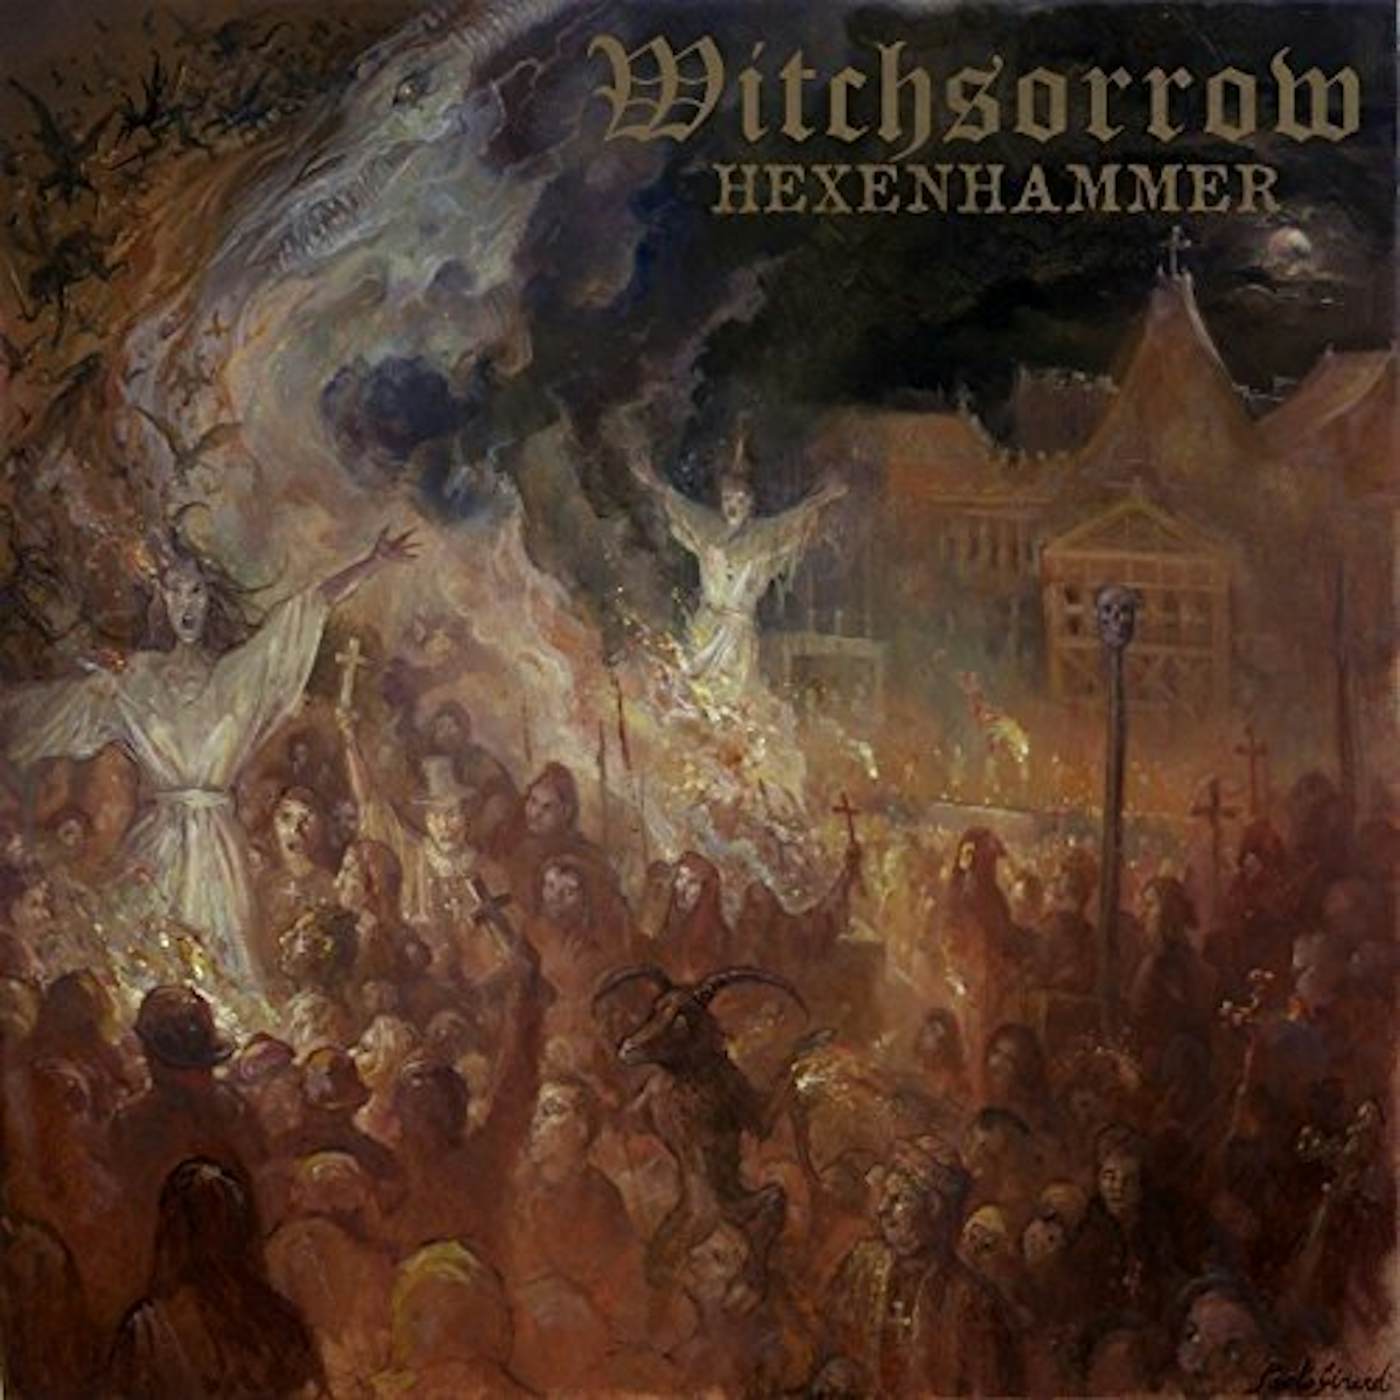 WitchSorrow Hexenhammer Vinyl Record